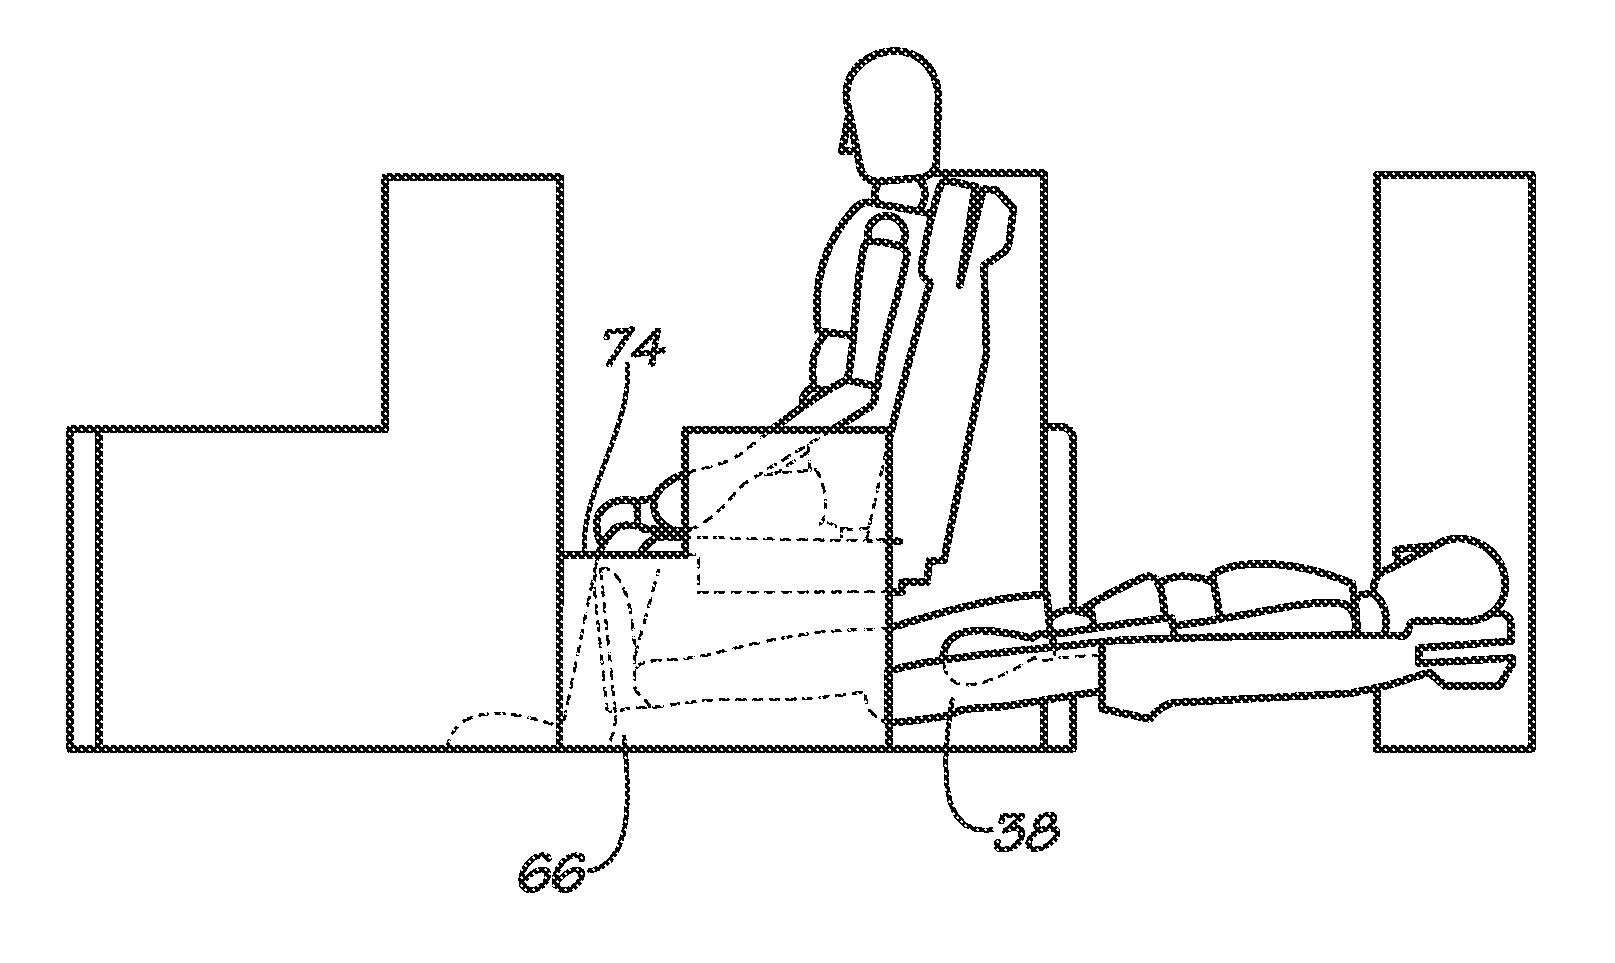 Passenger seating arrangements